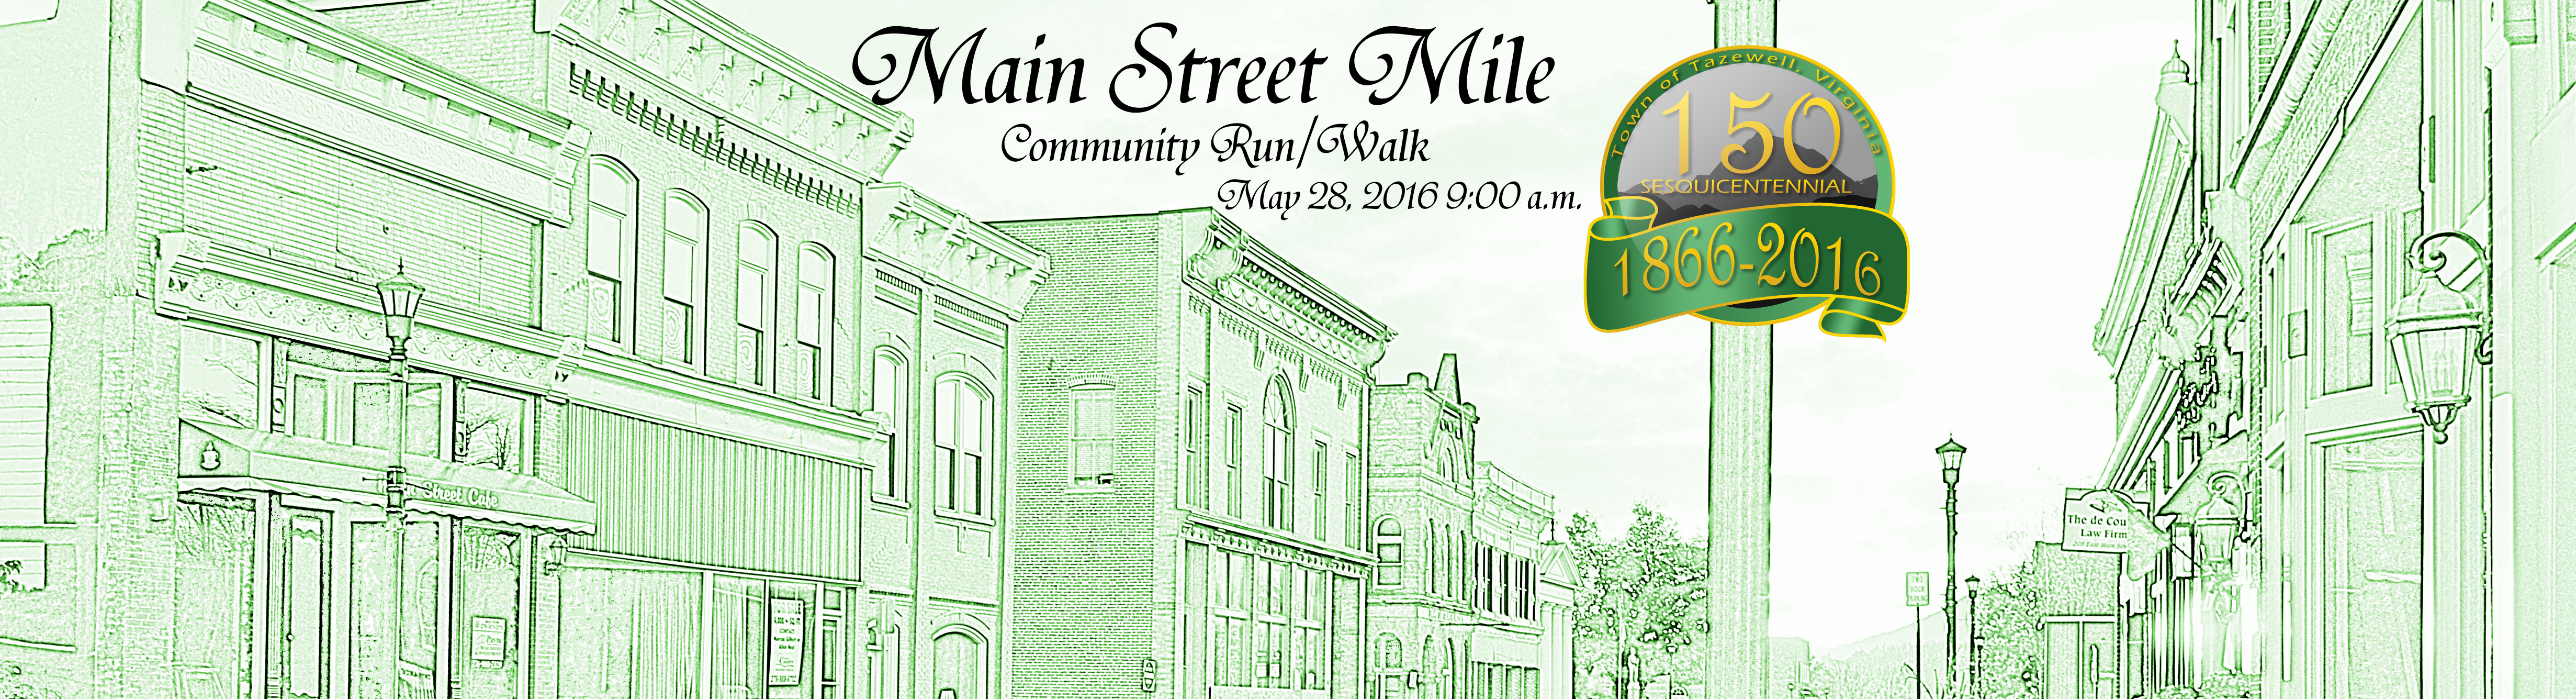 Main Street Mile – Pre-register through May 20